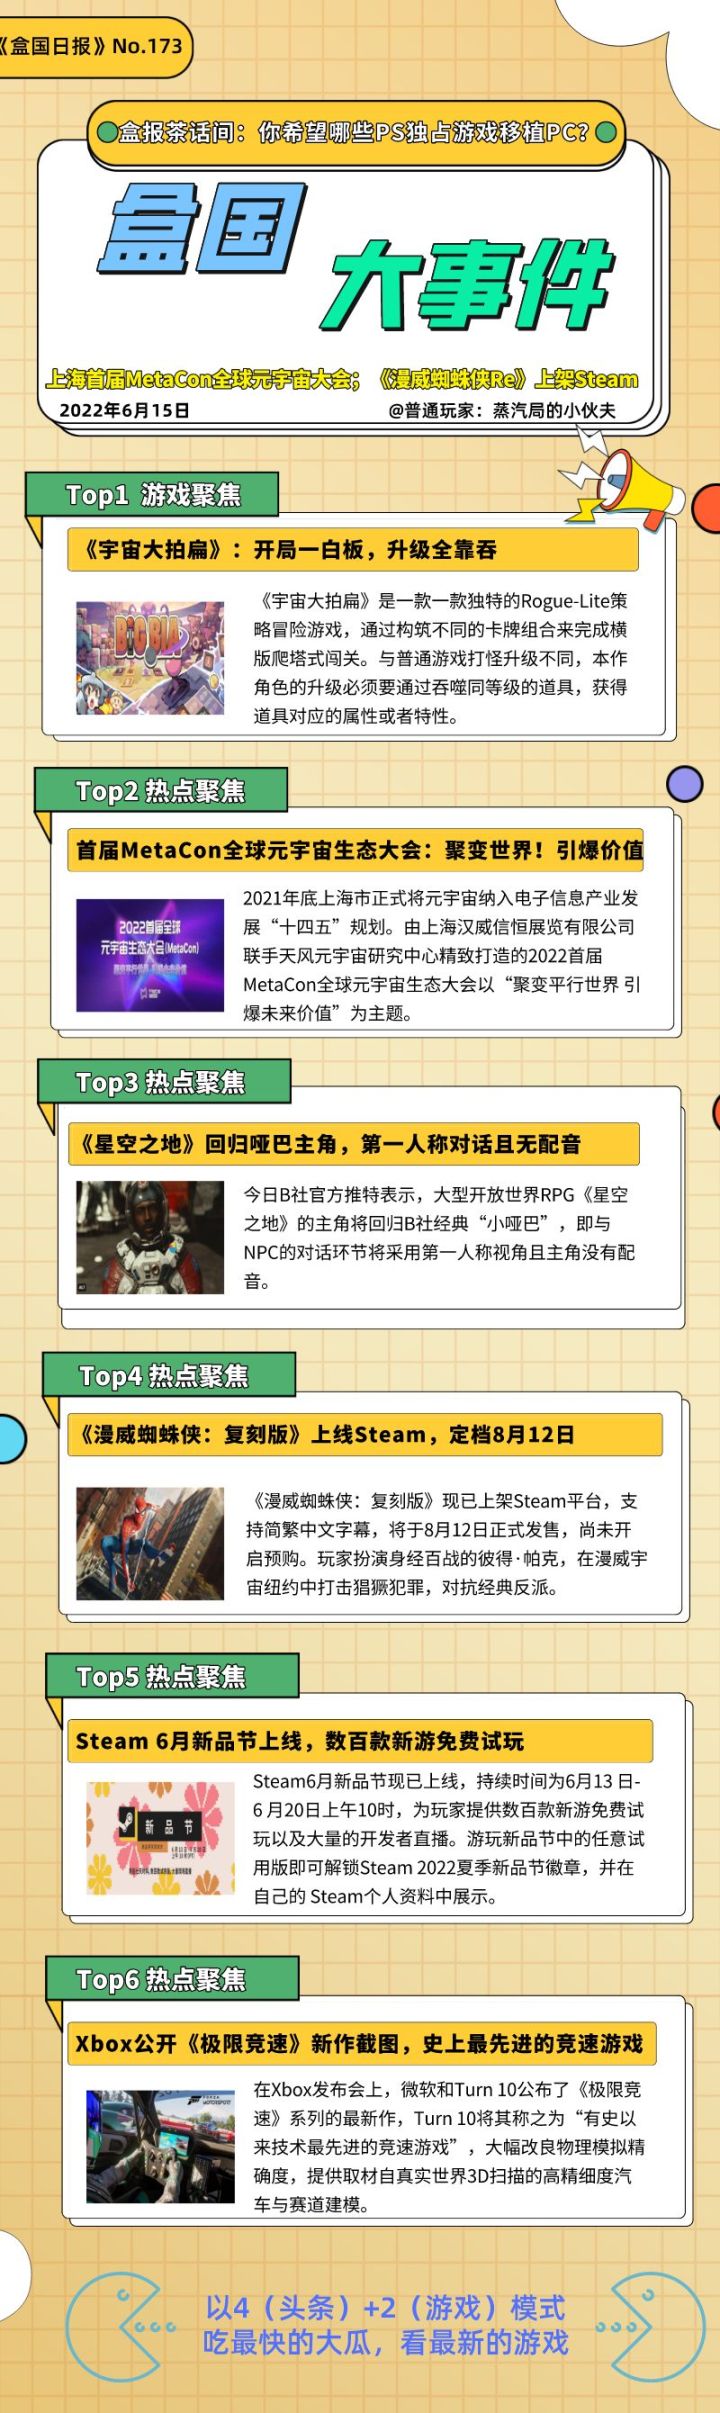 【PC遊戲】盒國日報|上海首屆MetaCon全球元宇宙大會；《漫威蜘蛛俠Re》上架Steam